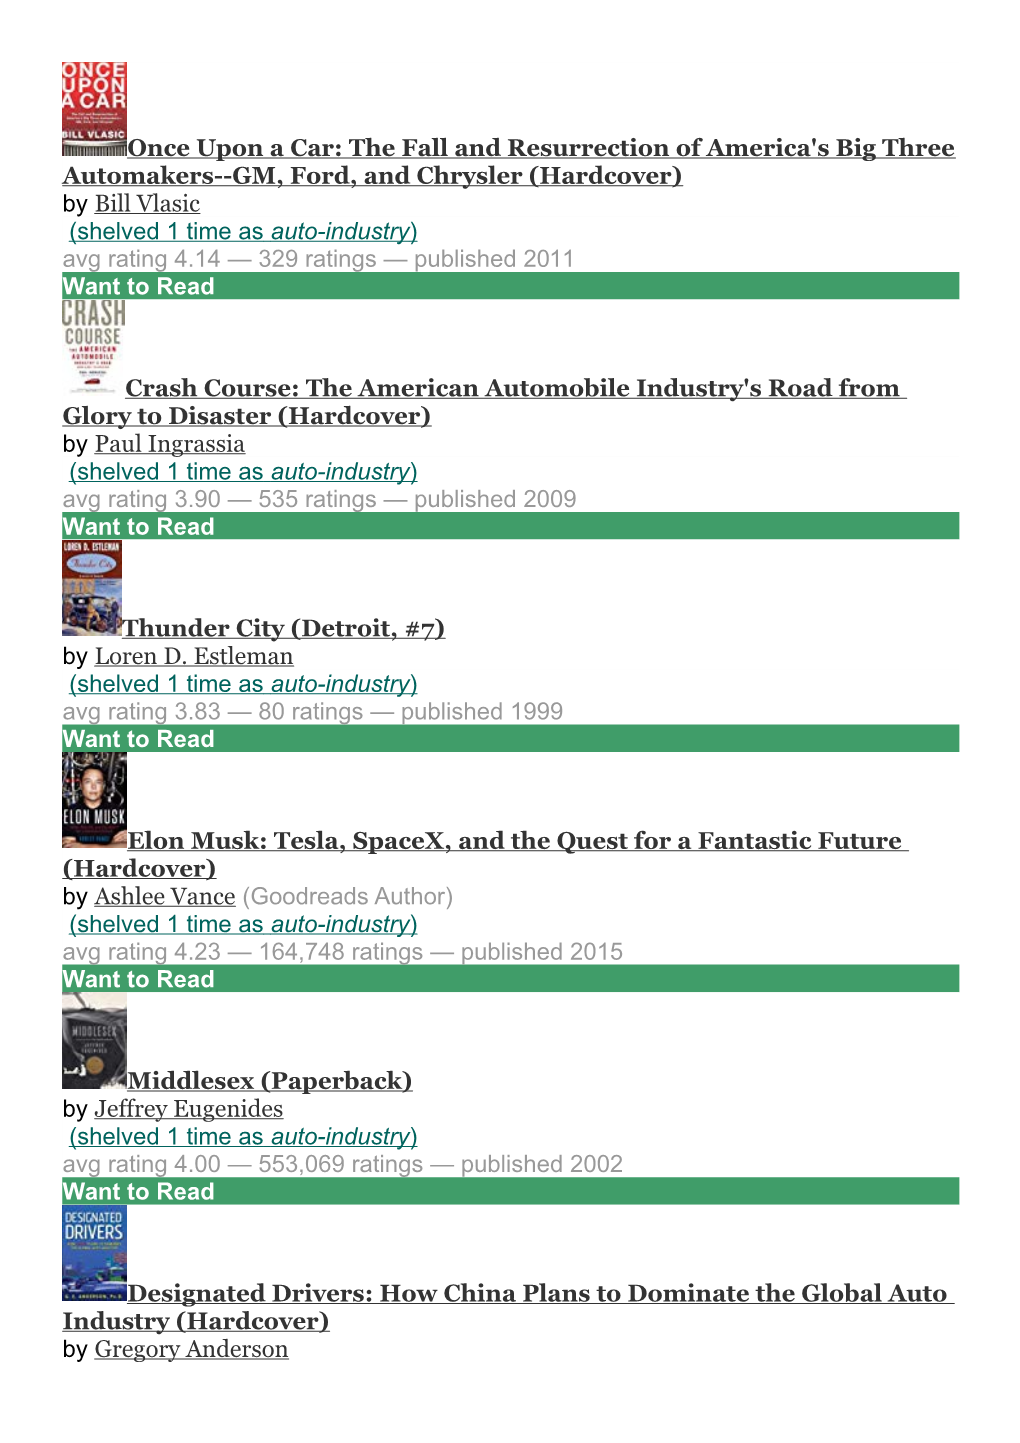 Popular Auto Industry Books